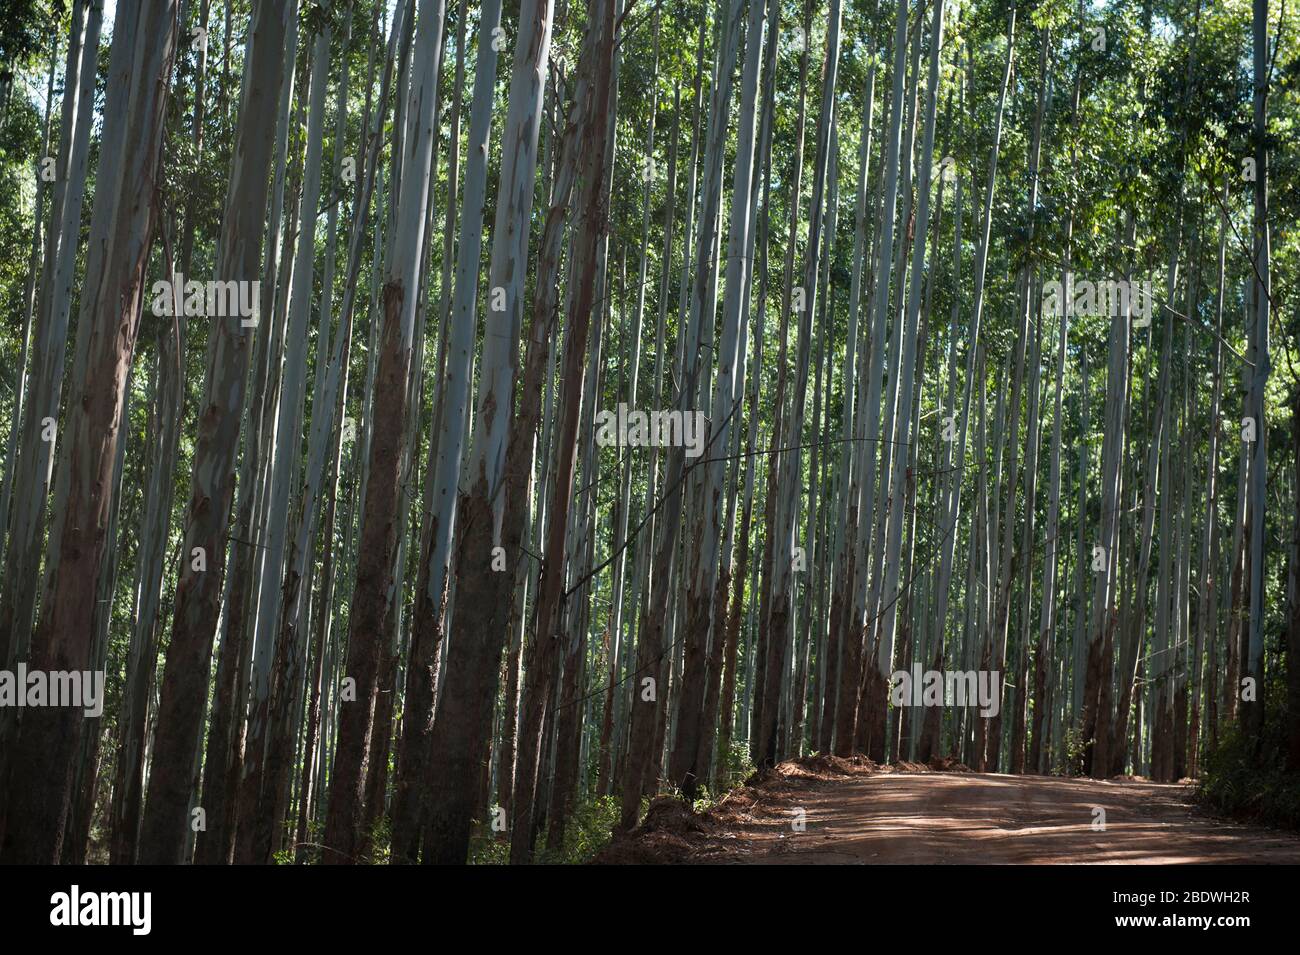 Eucalyptus, Eucalyptus globulus, forest road, Agatha, Tzaneen district, Limpopo province, South Africa Stock Photo